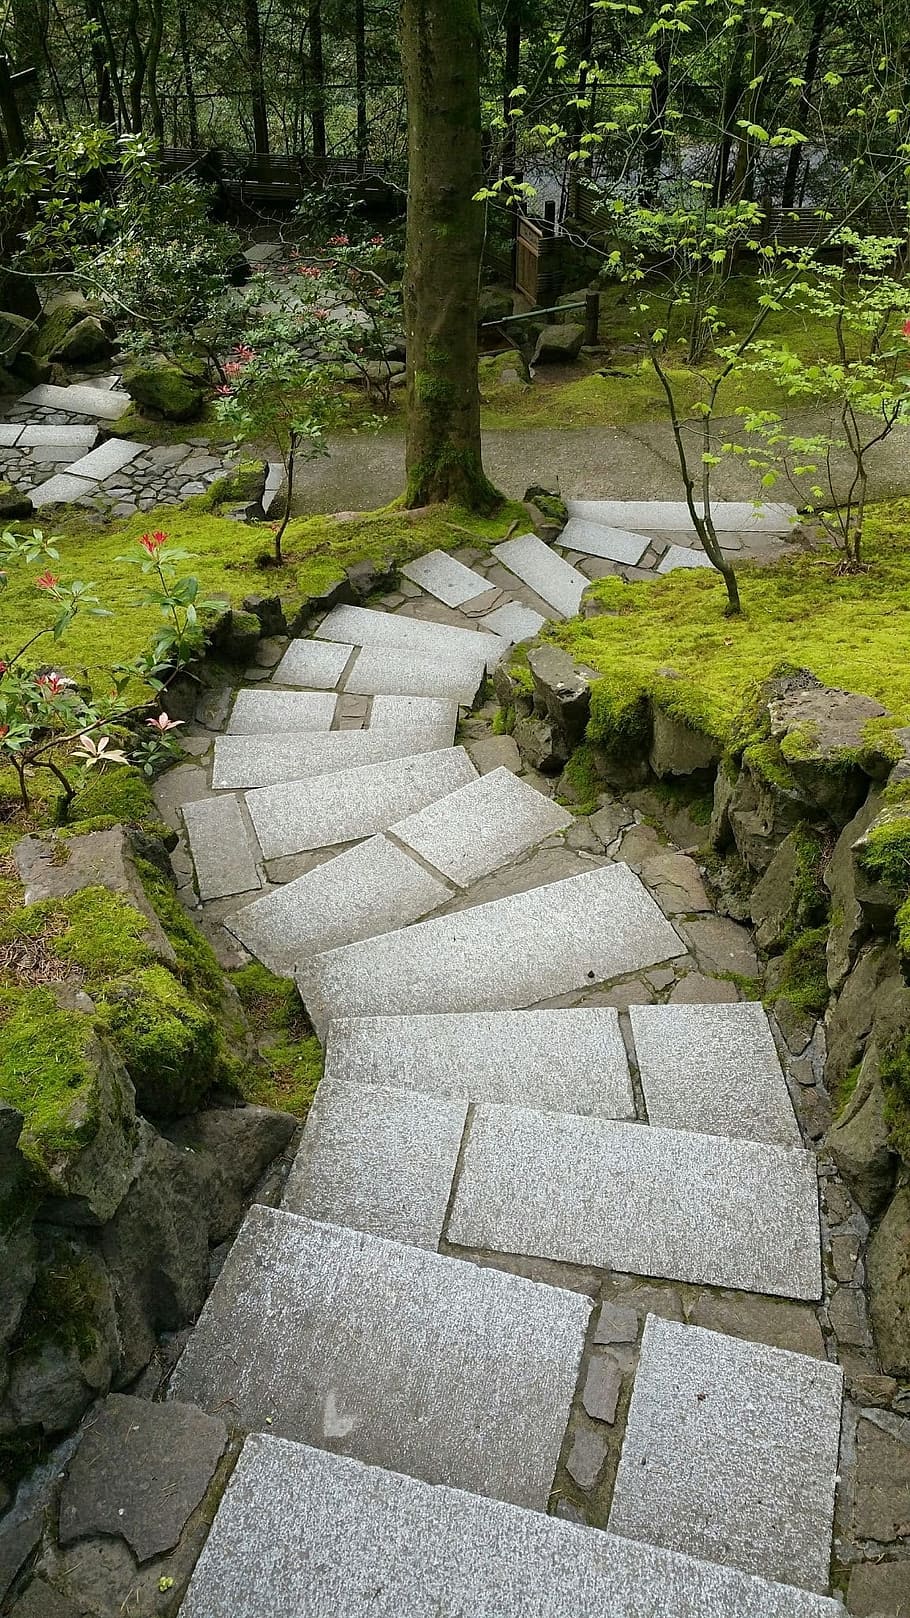 camino, jardín japonés, portland, caminar, zen, meditar, arquitectura, cultura, planta, escalera